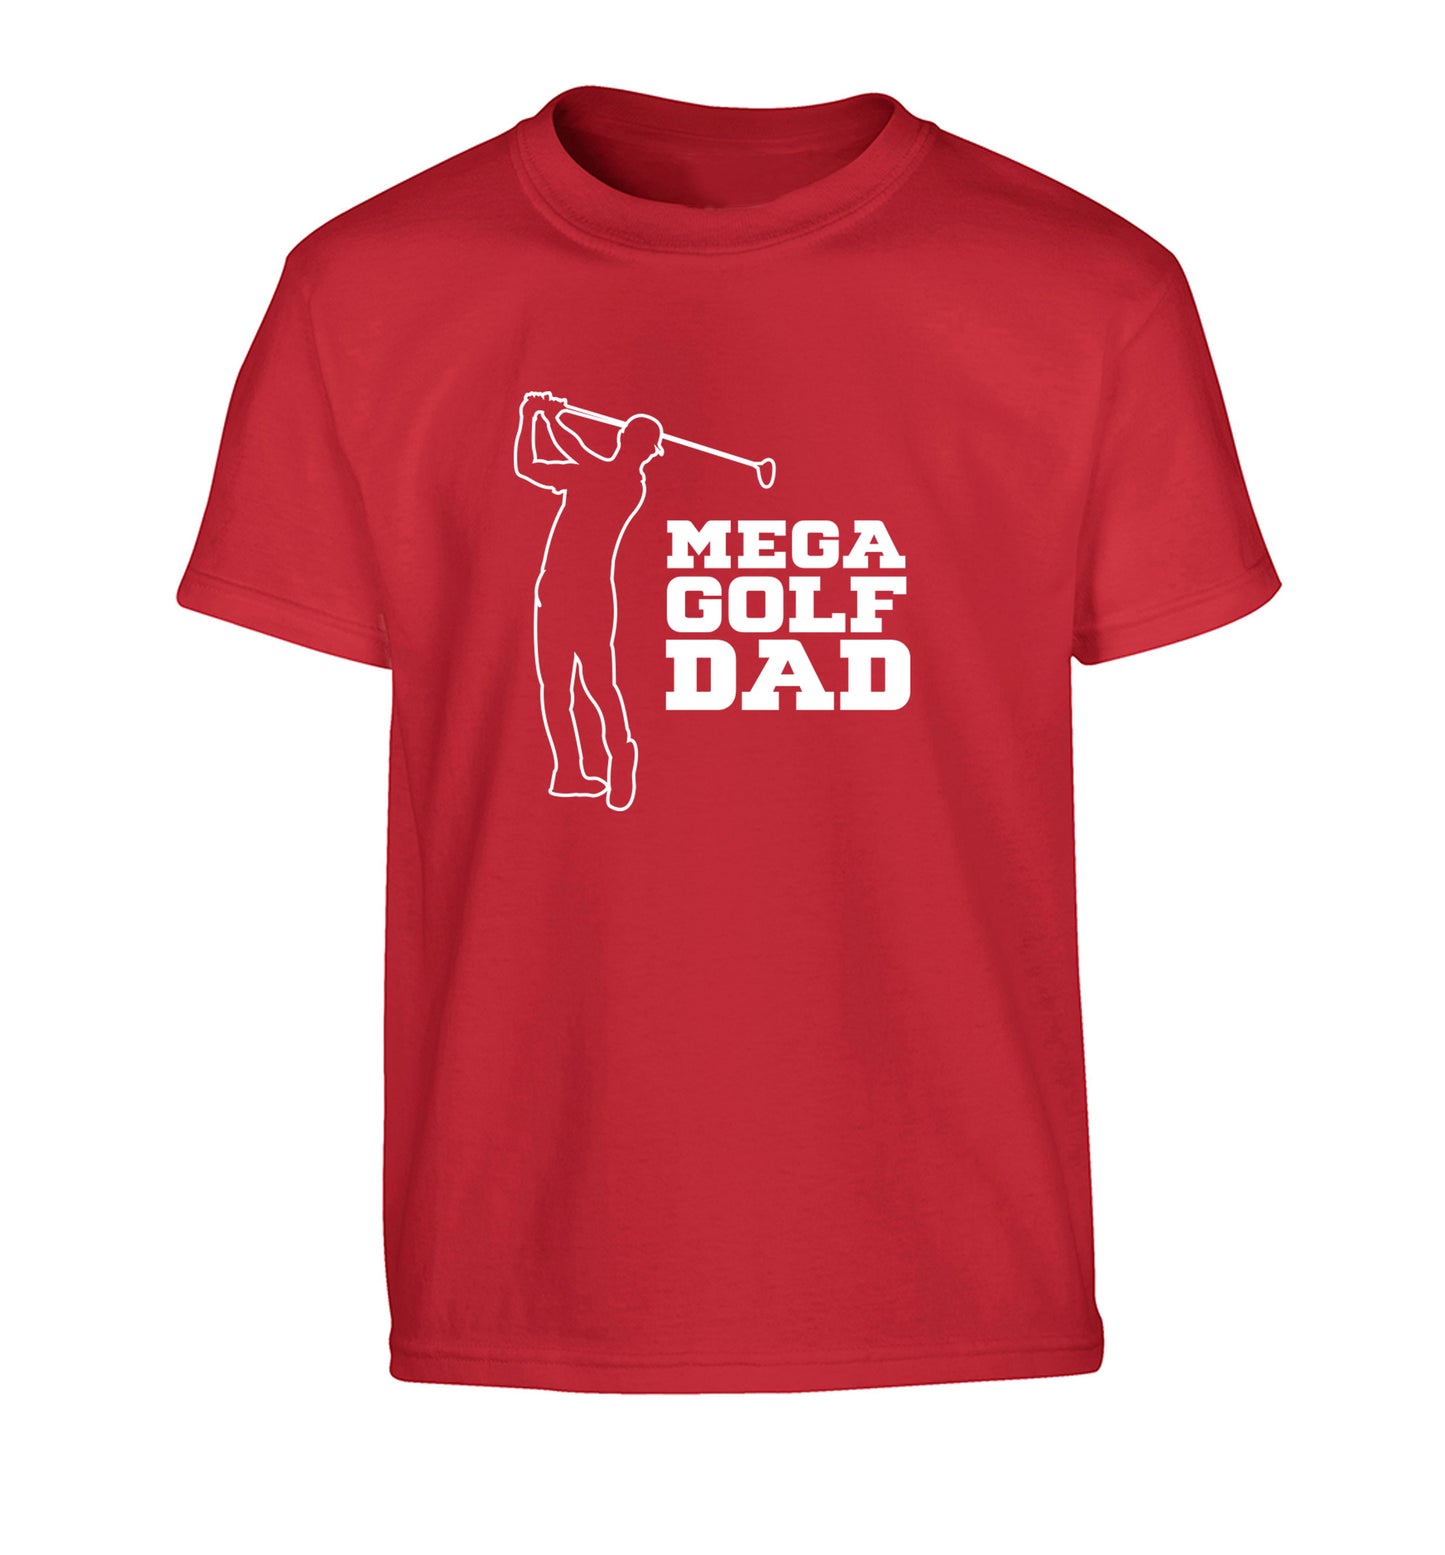 Mega golfing dad Children's red Tshirt 12-13 Years